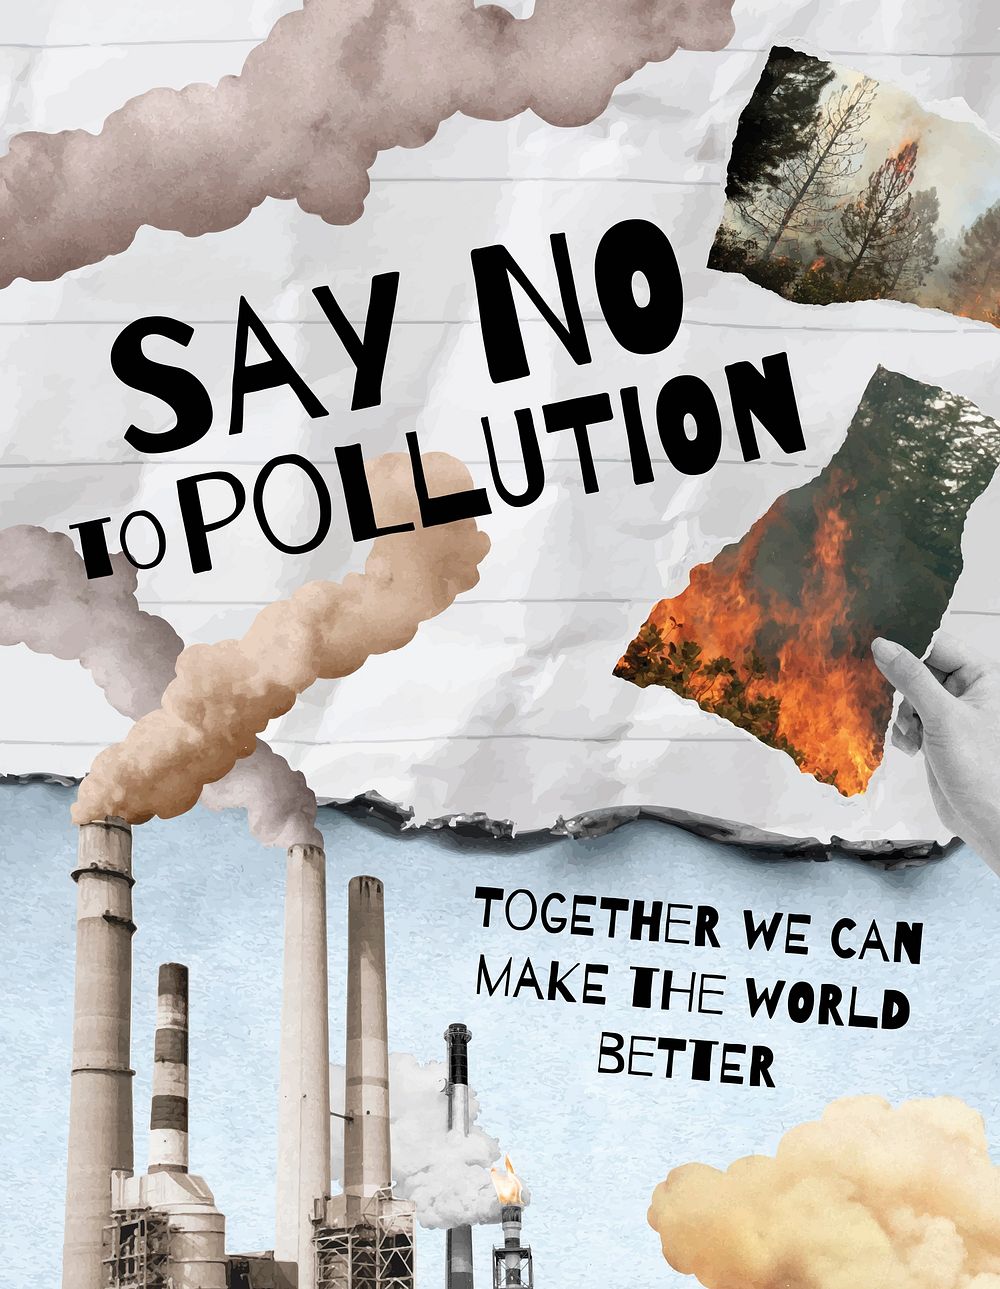 Stop pollution flyer template, editable text vector